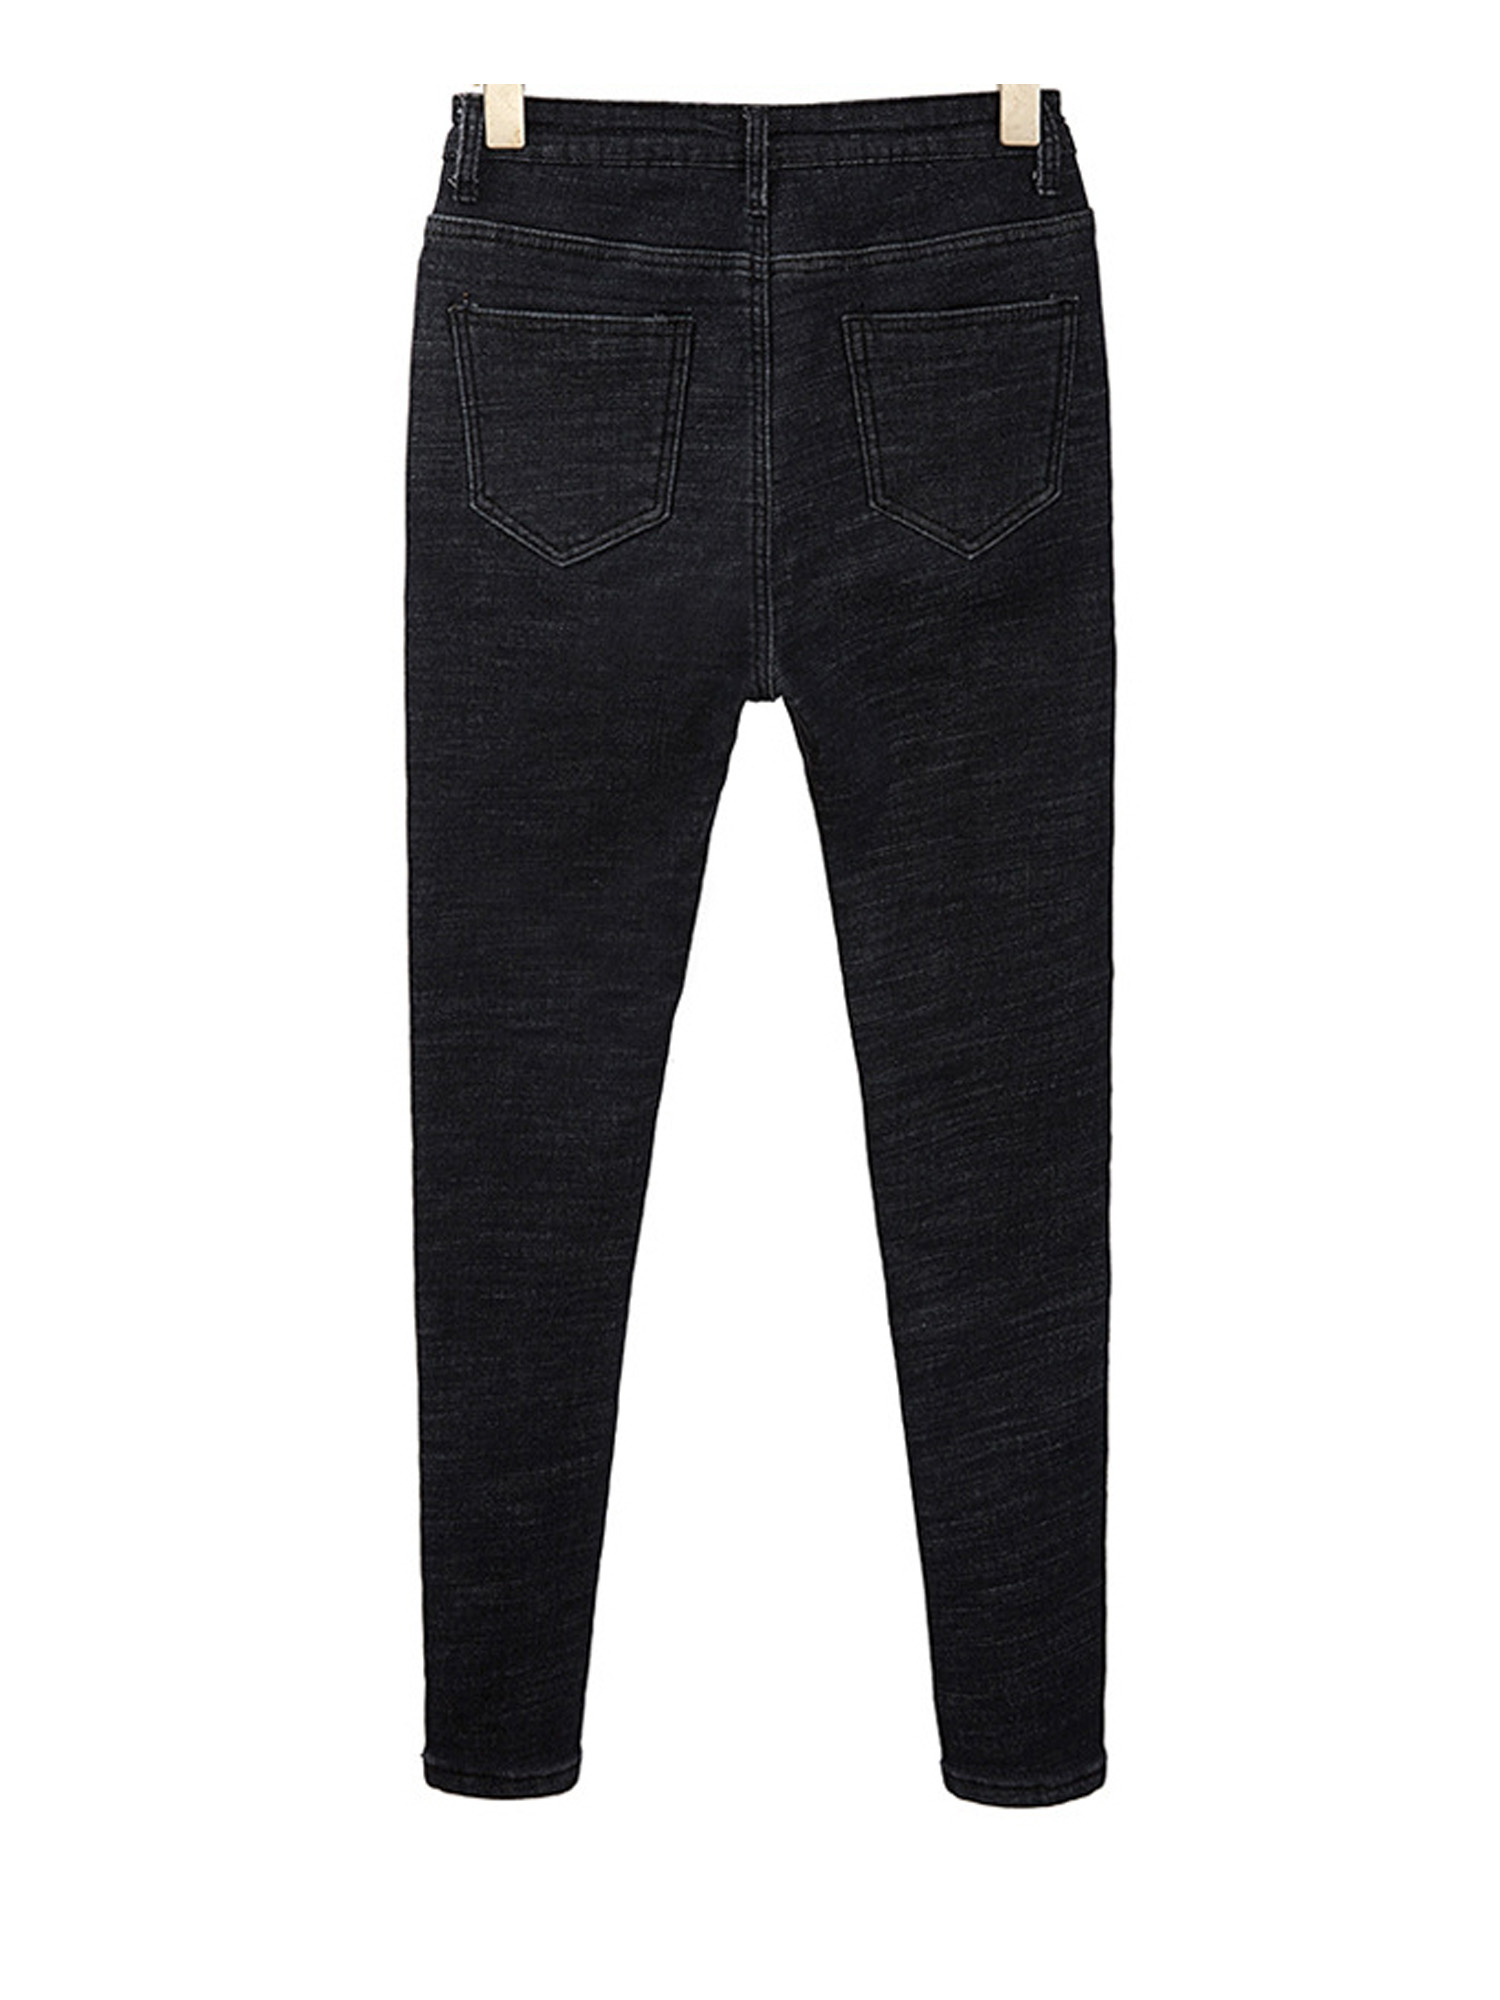 Listenwind Womens Warm Fleece Lined Jeans Stretch Skinny Winter Thick Jeggings Denim Long Pants Black - image 4 of 7